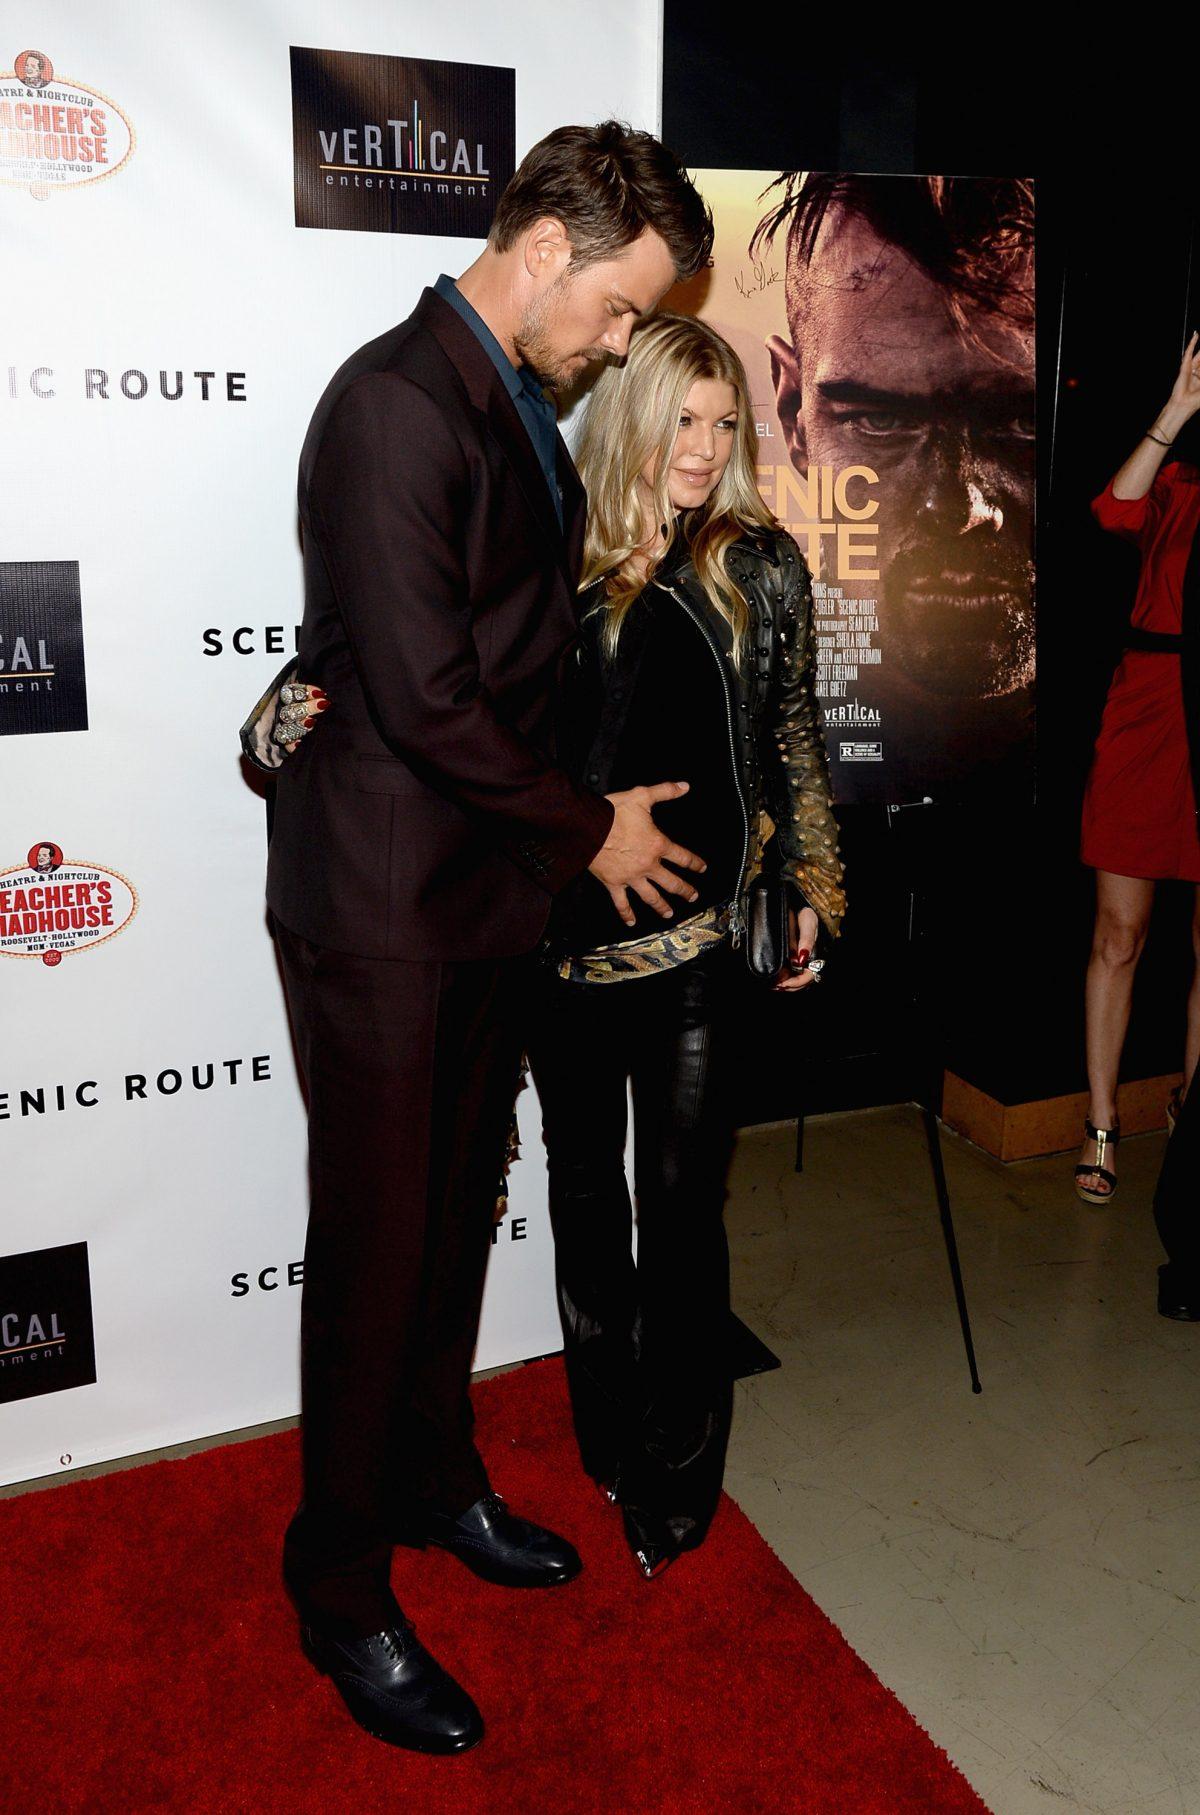 Actor Josh Duhamel and singer Fergie on August 20 in Hollywood, California. Their new son is named Axl Jack Duhamel. (Michael Buckner/Getty Images)